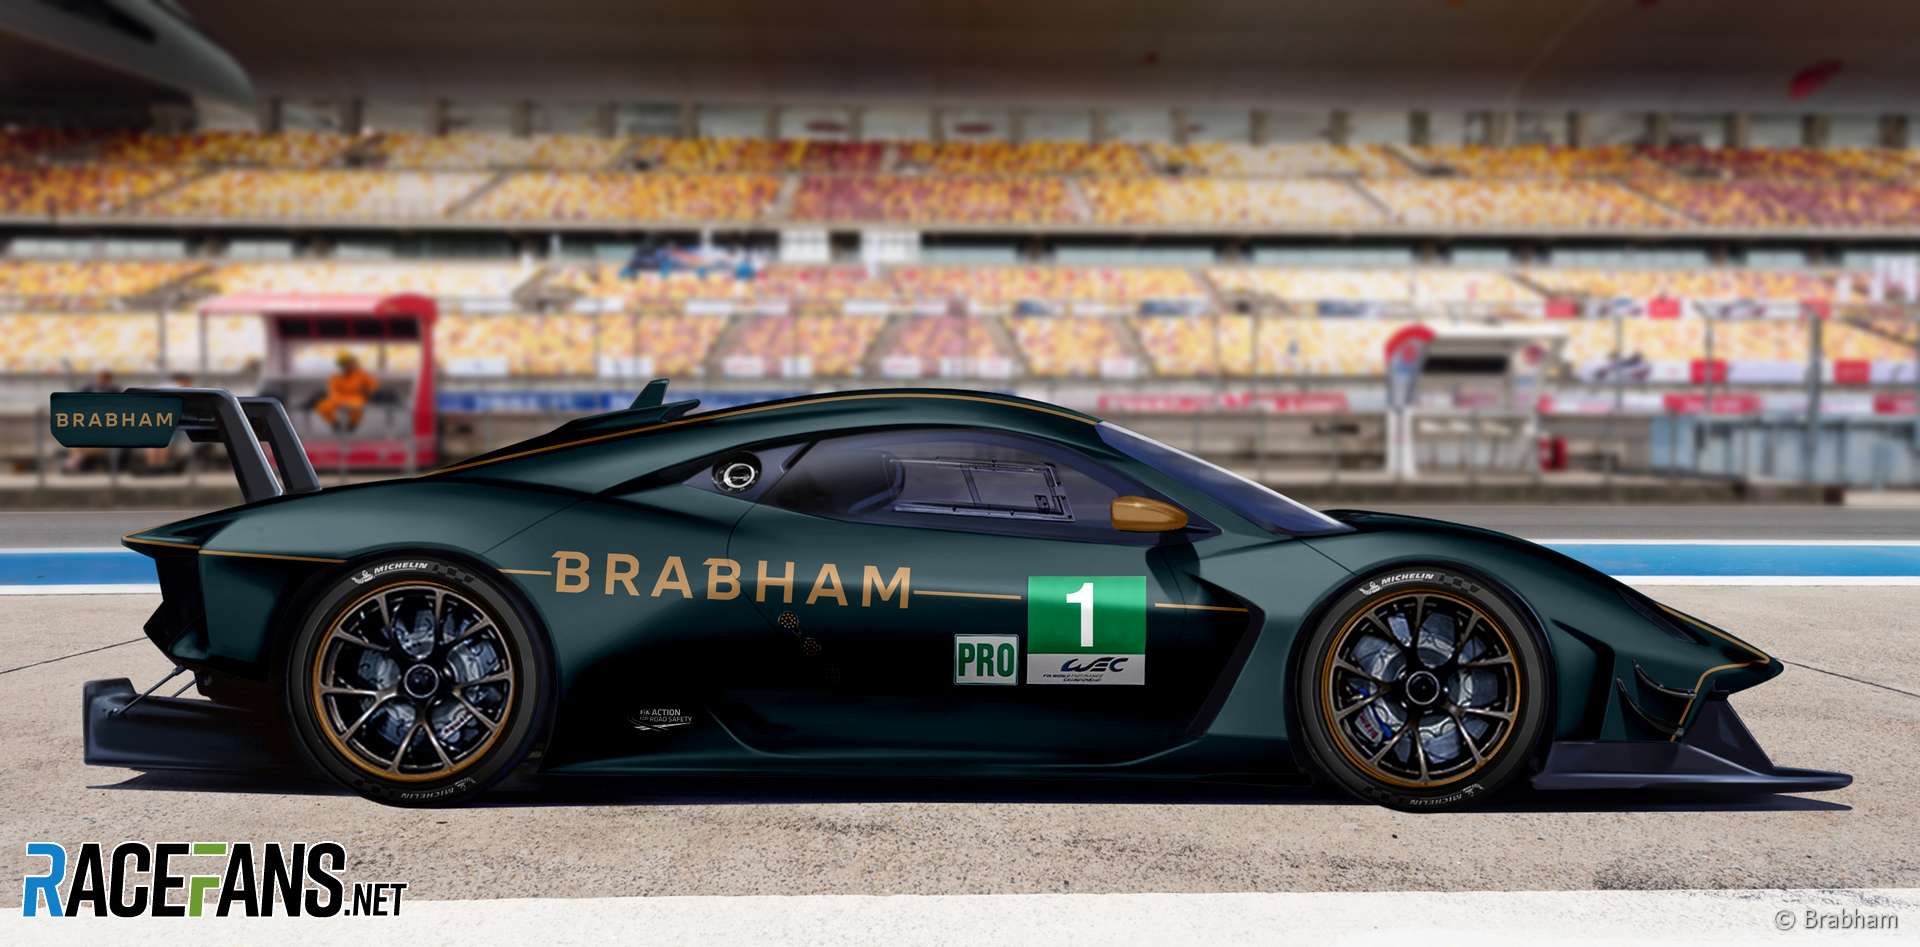 Brabham Le Mans GTE rendering, 2019